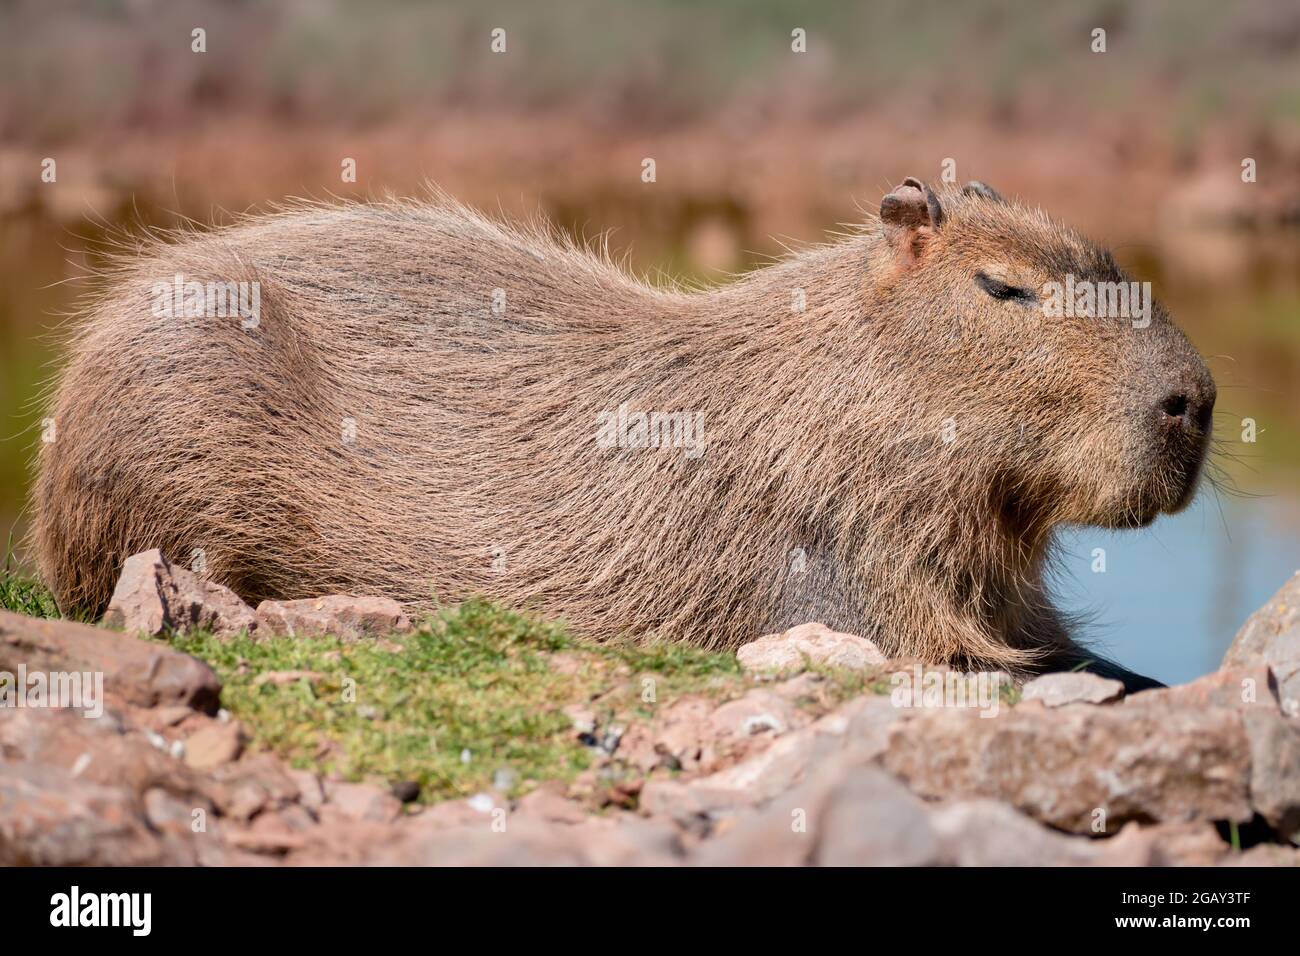 A capybara in profile resting on rocks Stock Photo